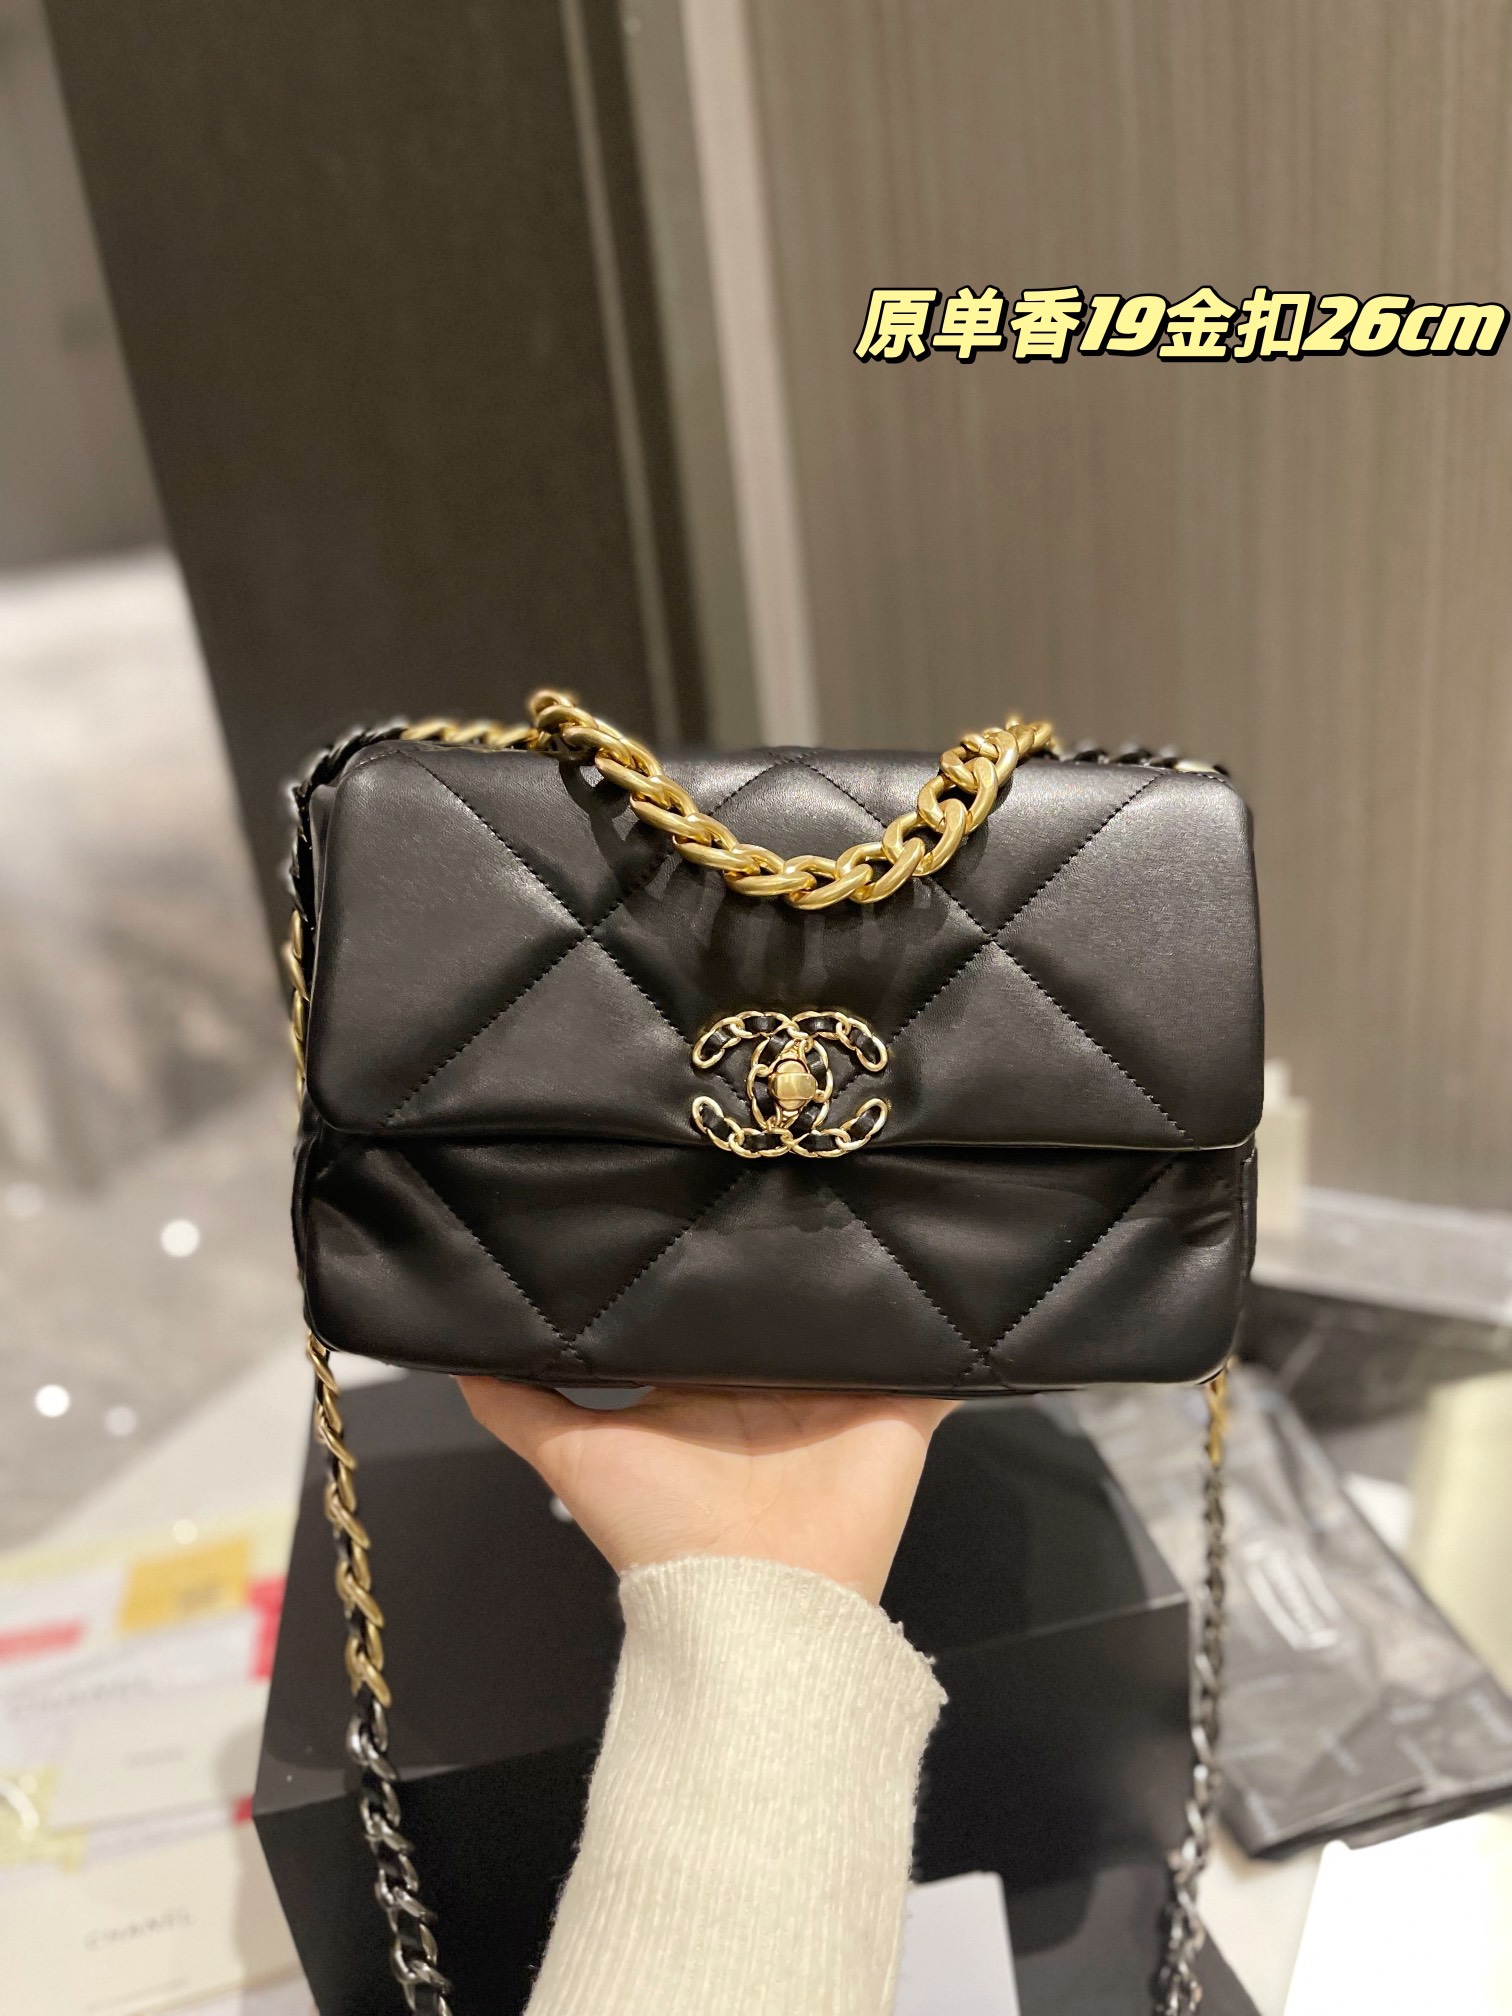 Chanel 19 Handbags Shoulder Bags